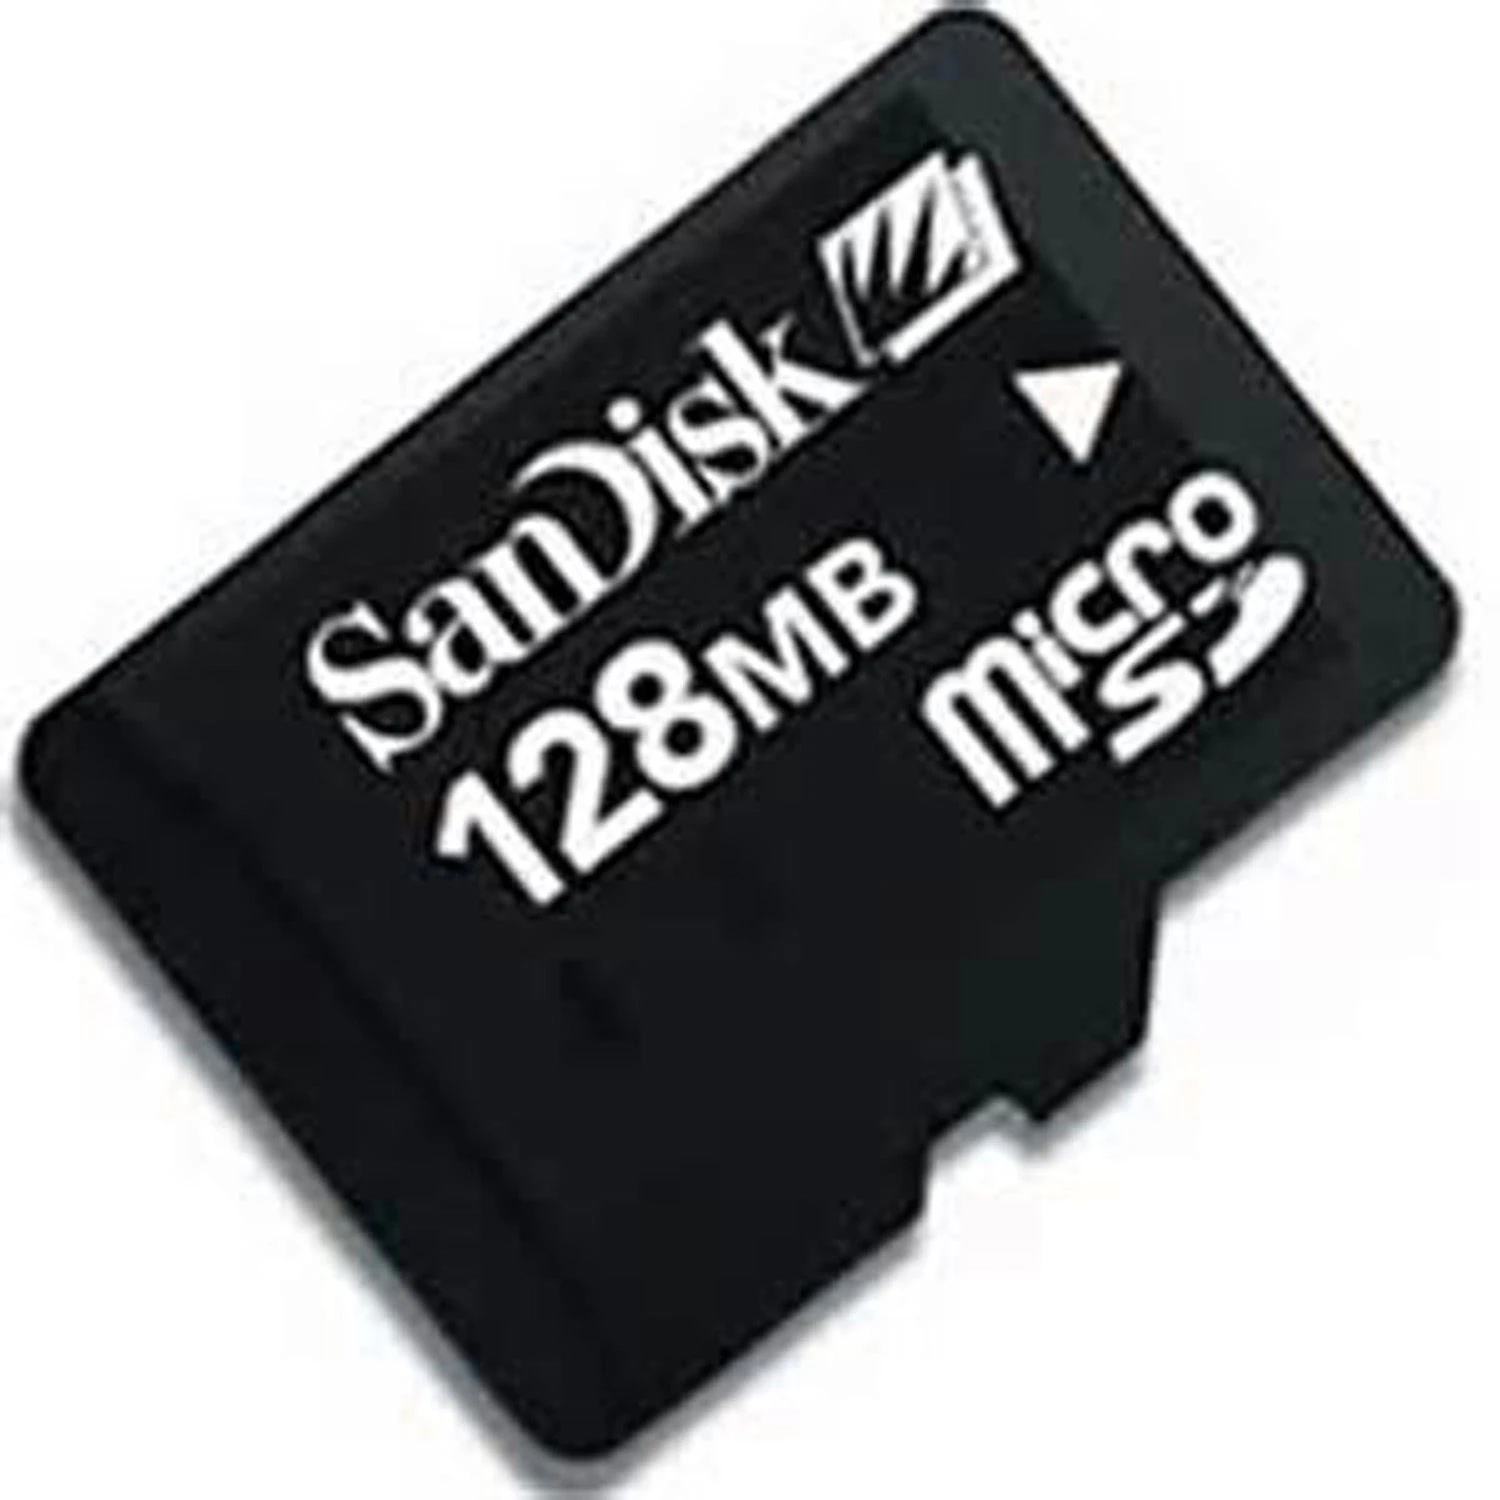 SD Memory Card Mini SD Card 2GB 16GB 8GB 4GB 2GB 1GB 512MB 256M 128M 64M